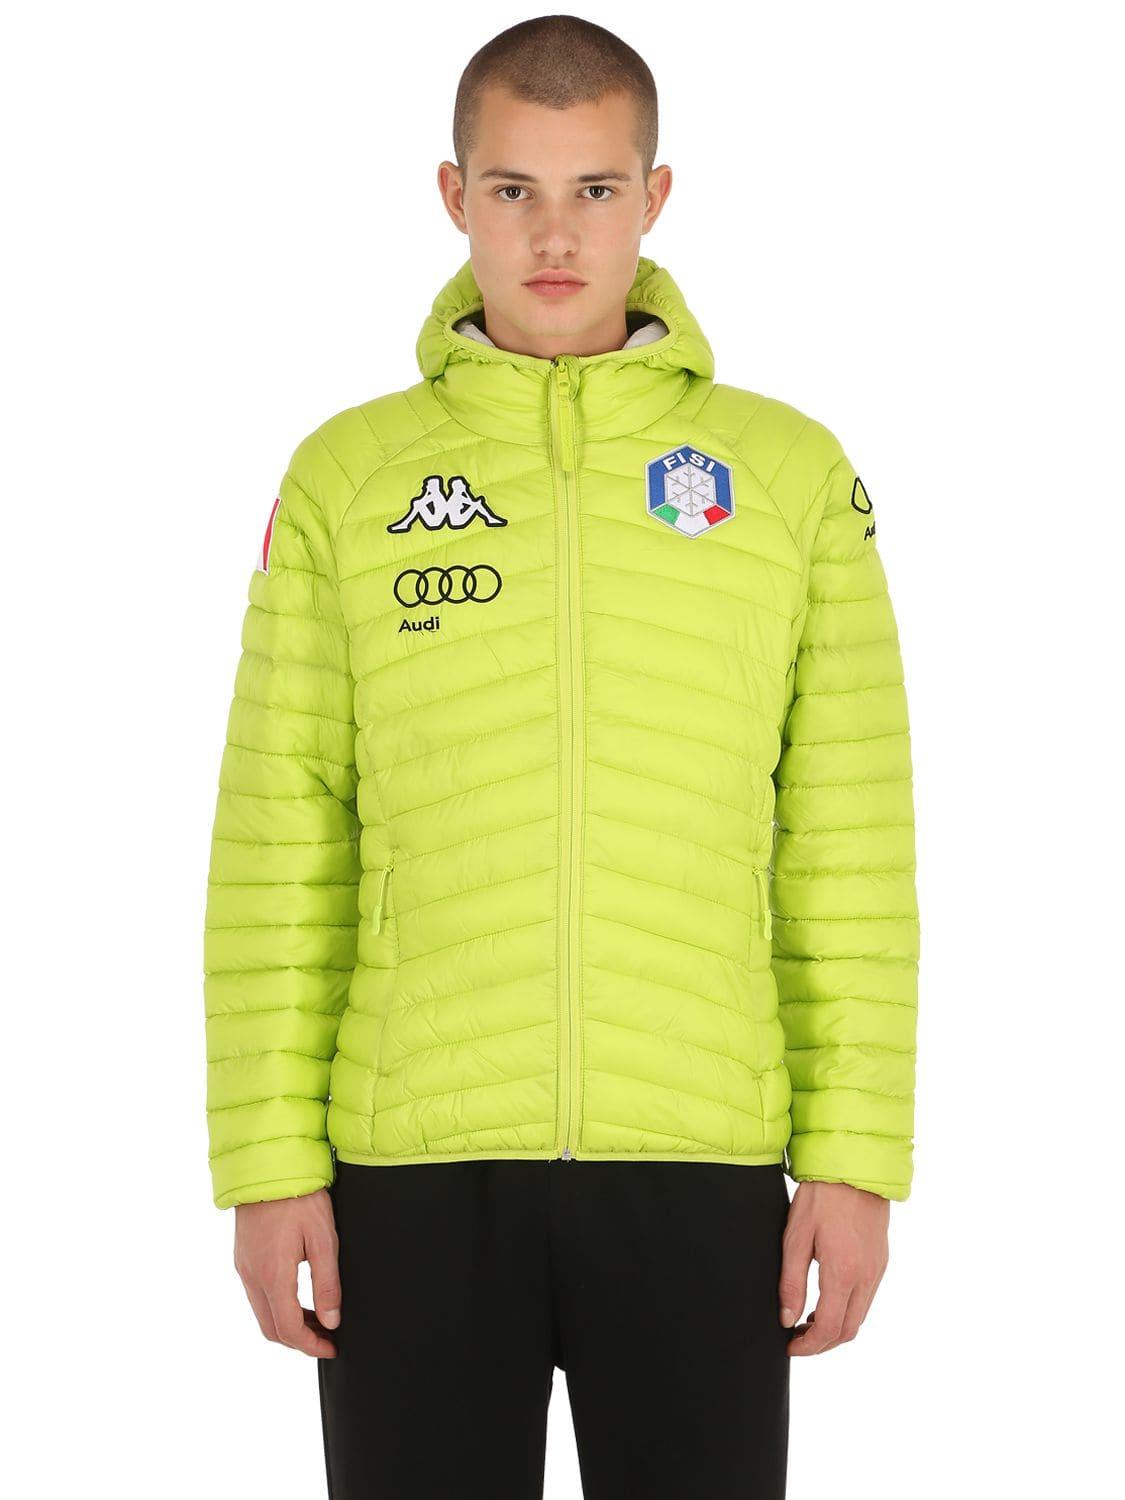 Kappa Fisi Italian Ski Team Primaloft Jacket in Green Lime (Green) for Men  | Lyst